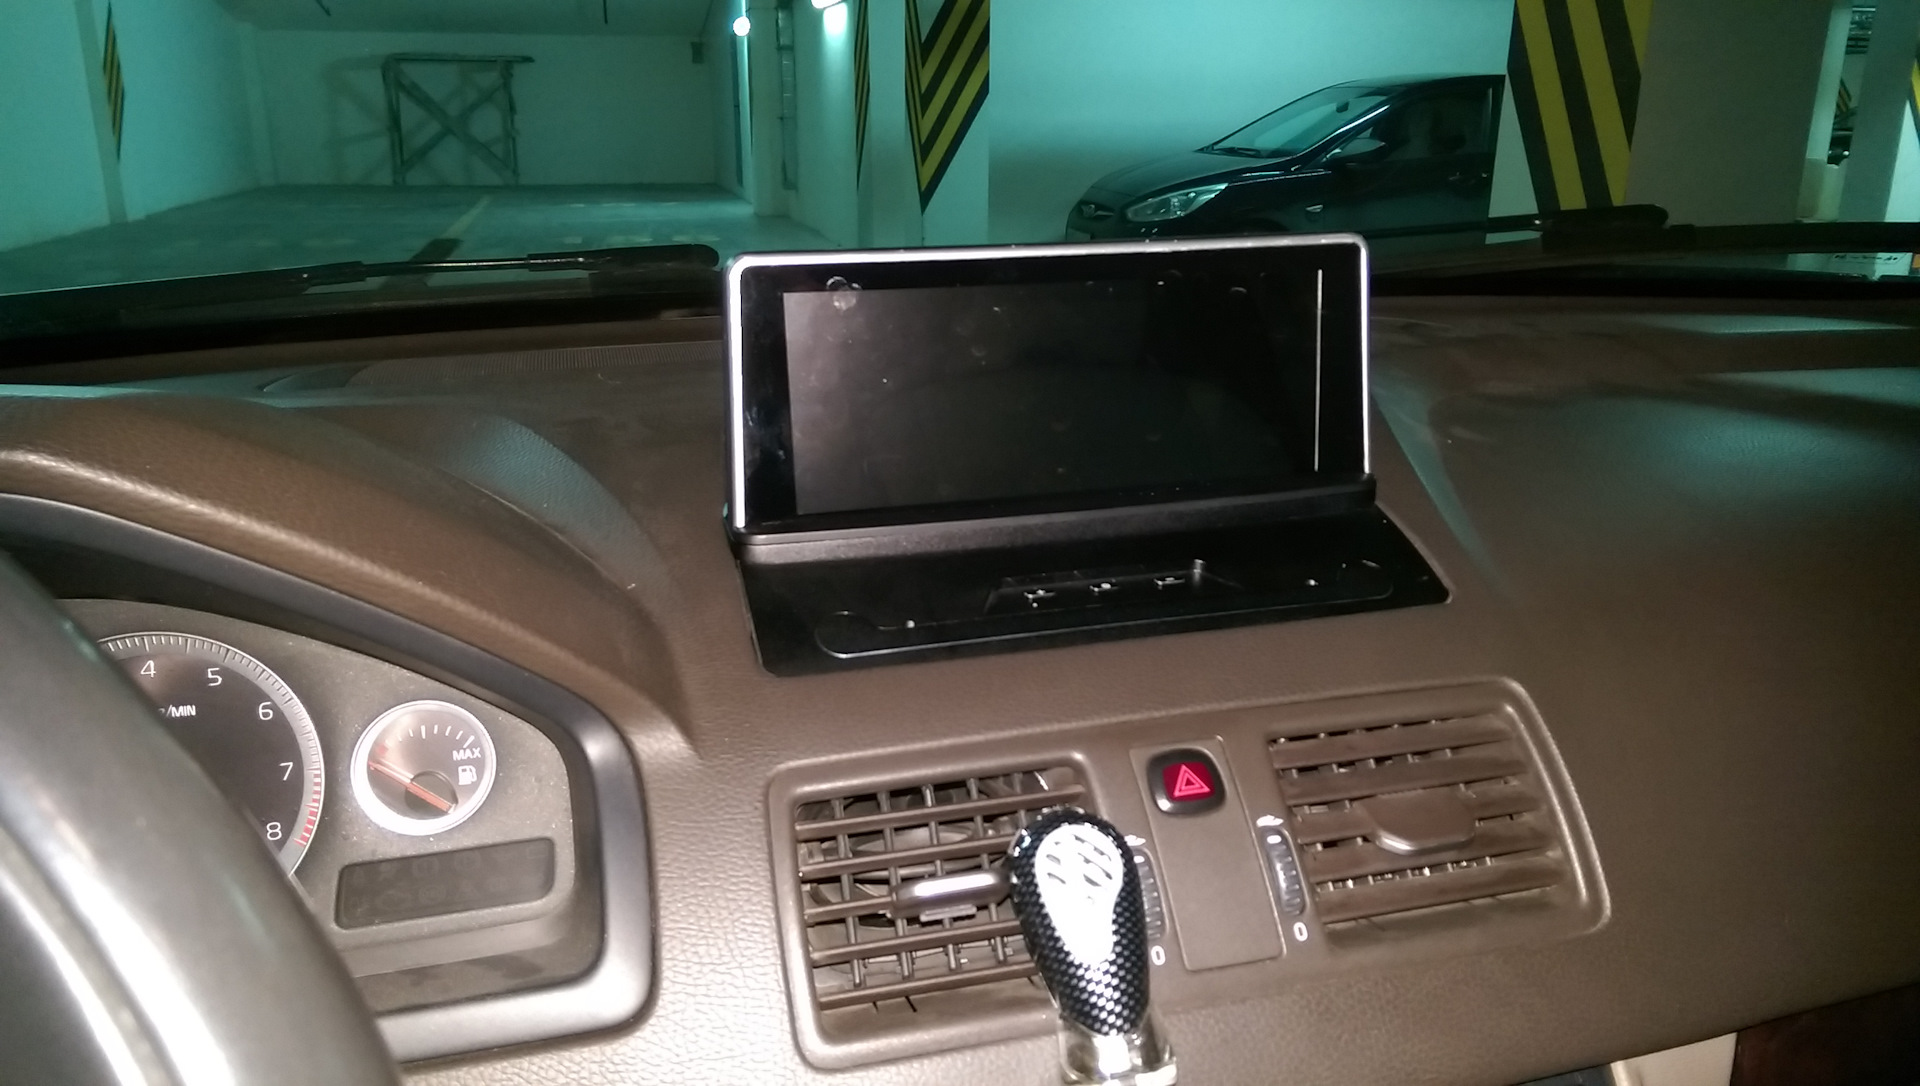 Экран на торпеде. Volvo xc90 монитор в Торпедо. Монитор для автомобиля на торпеду для Вольво хс90. Планшет в Volvo xc90. Drive Volvo xc90 монитор.